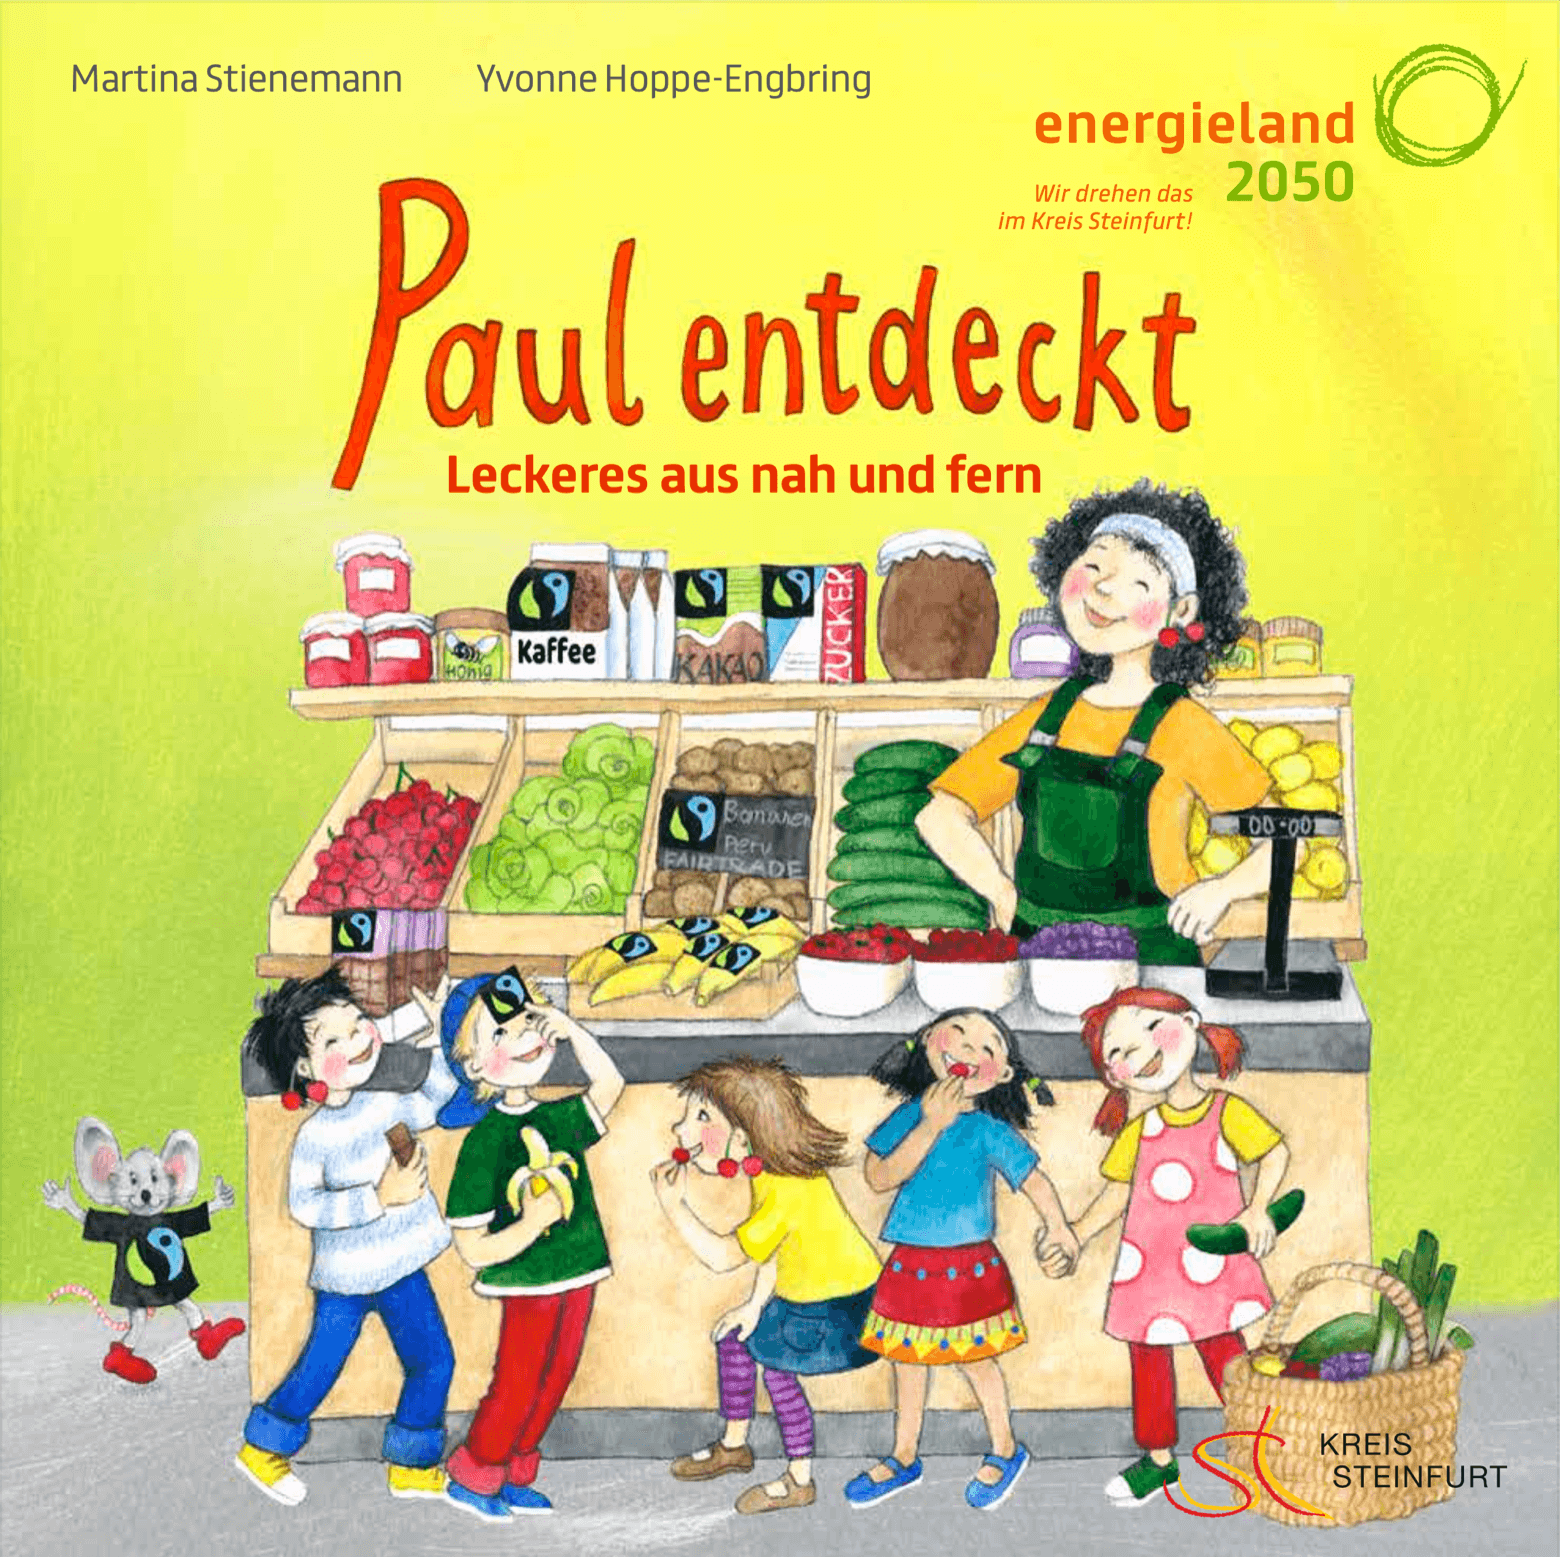 Kinderbuch „Paul entdeckt“ | Tecklenburger Marktland